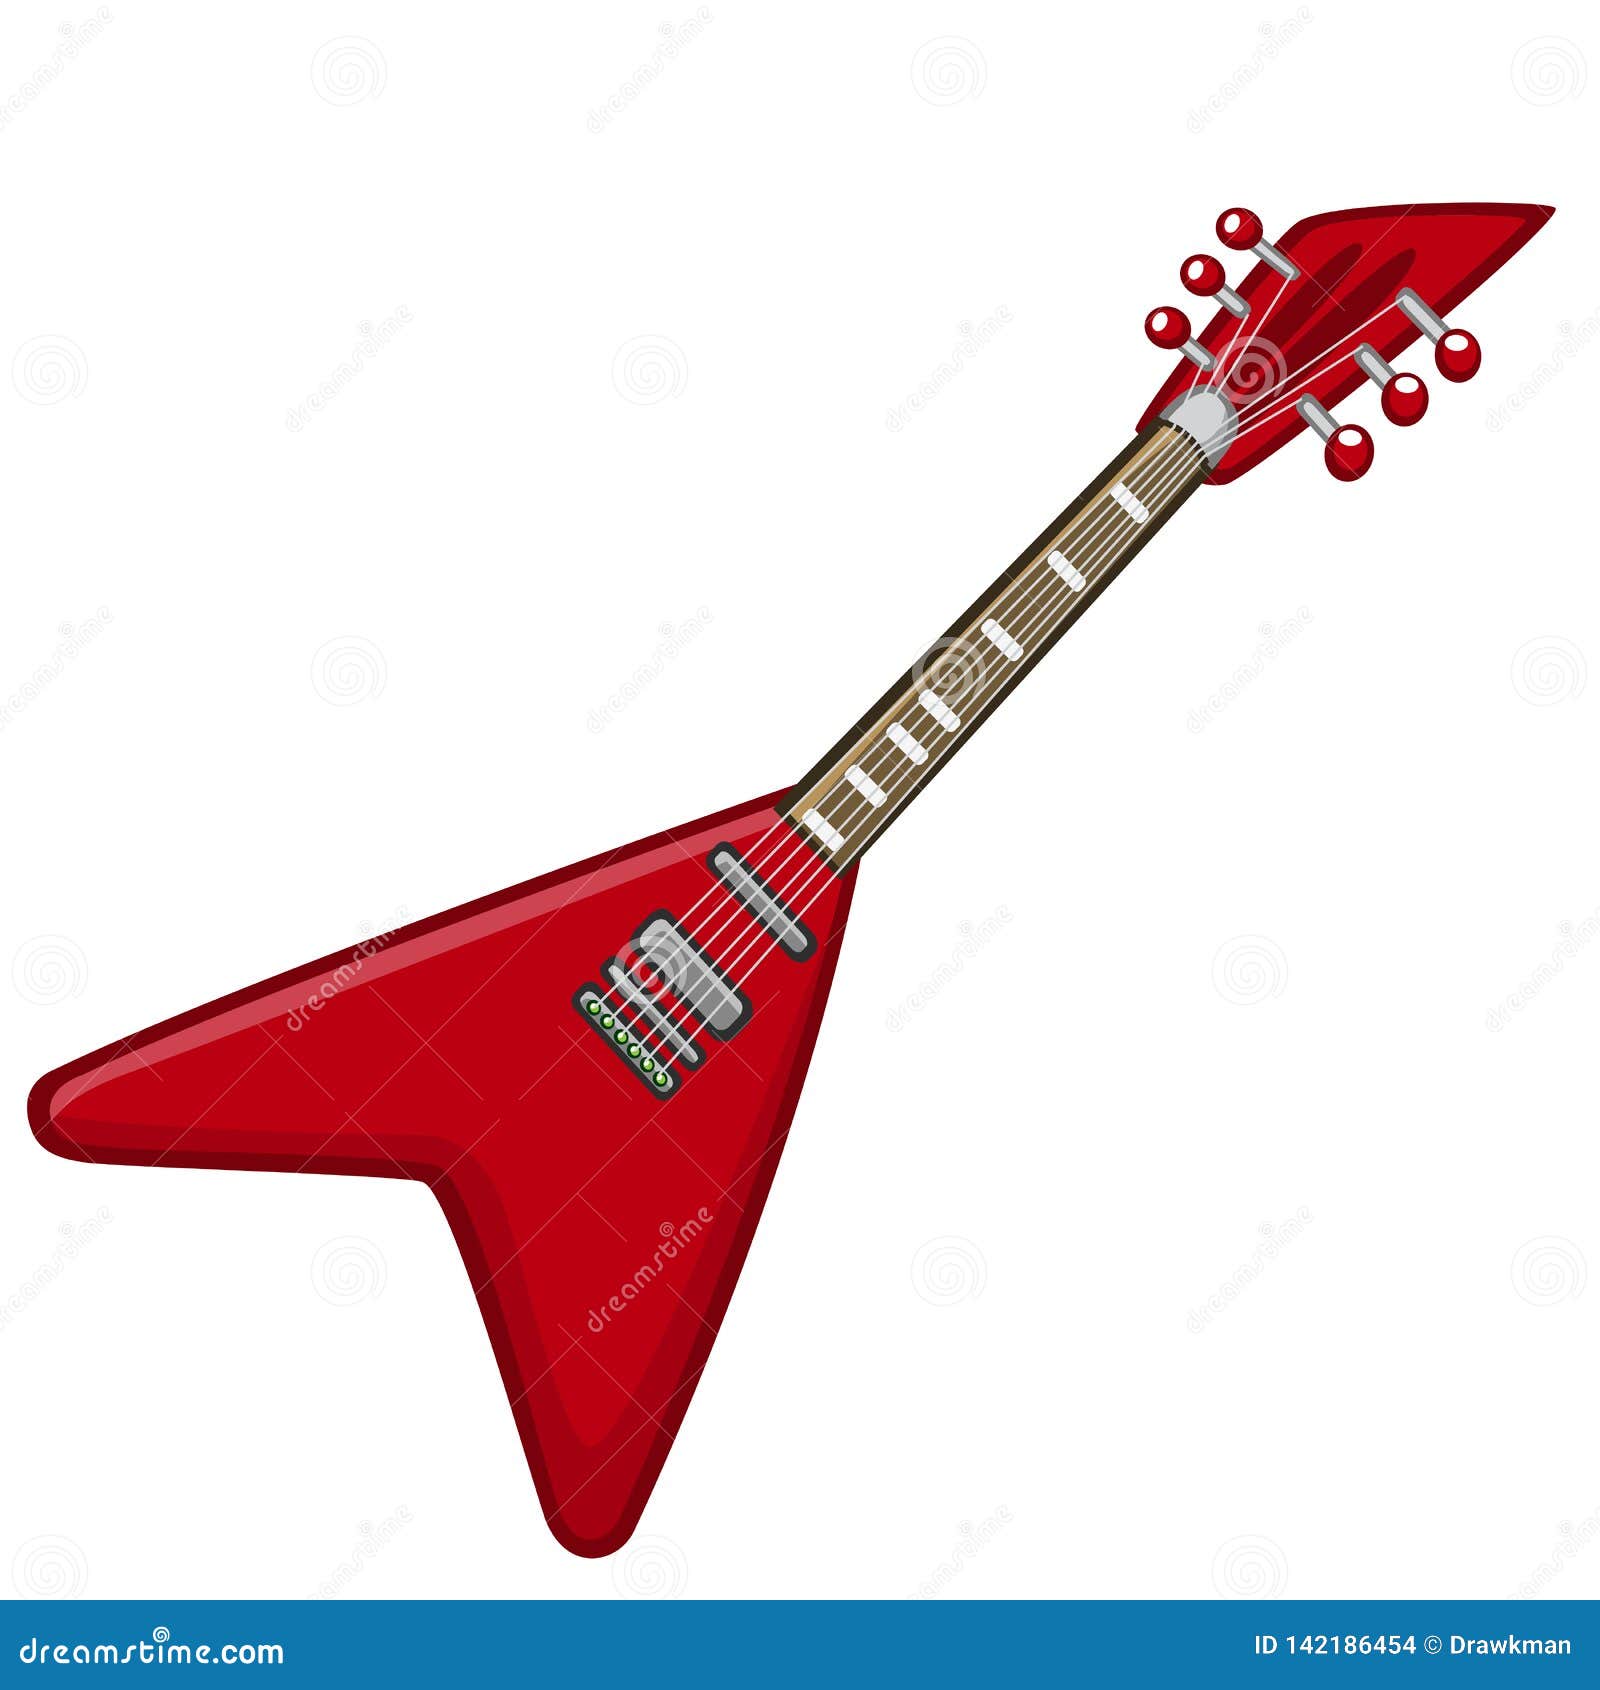 Electric Guitar Vector Illustration of Metal or Rock-n-roll Guitar Stock Vector - Illustration of fretboard, jazz: